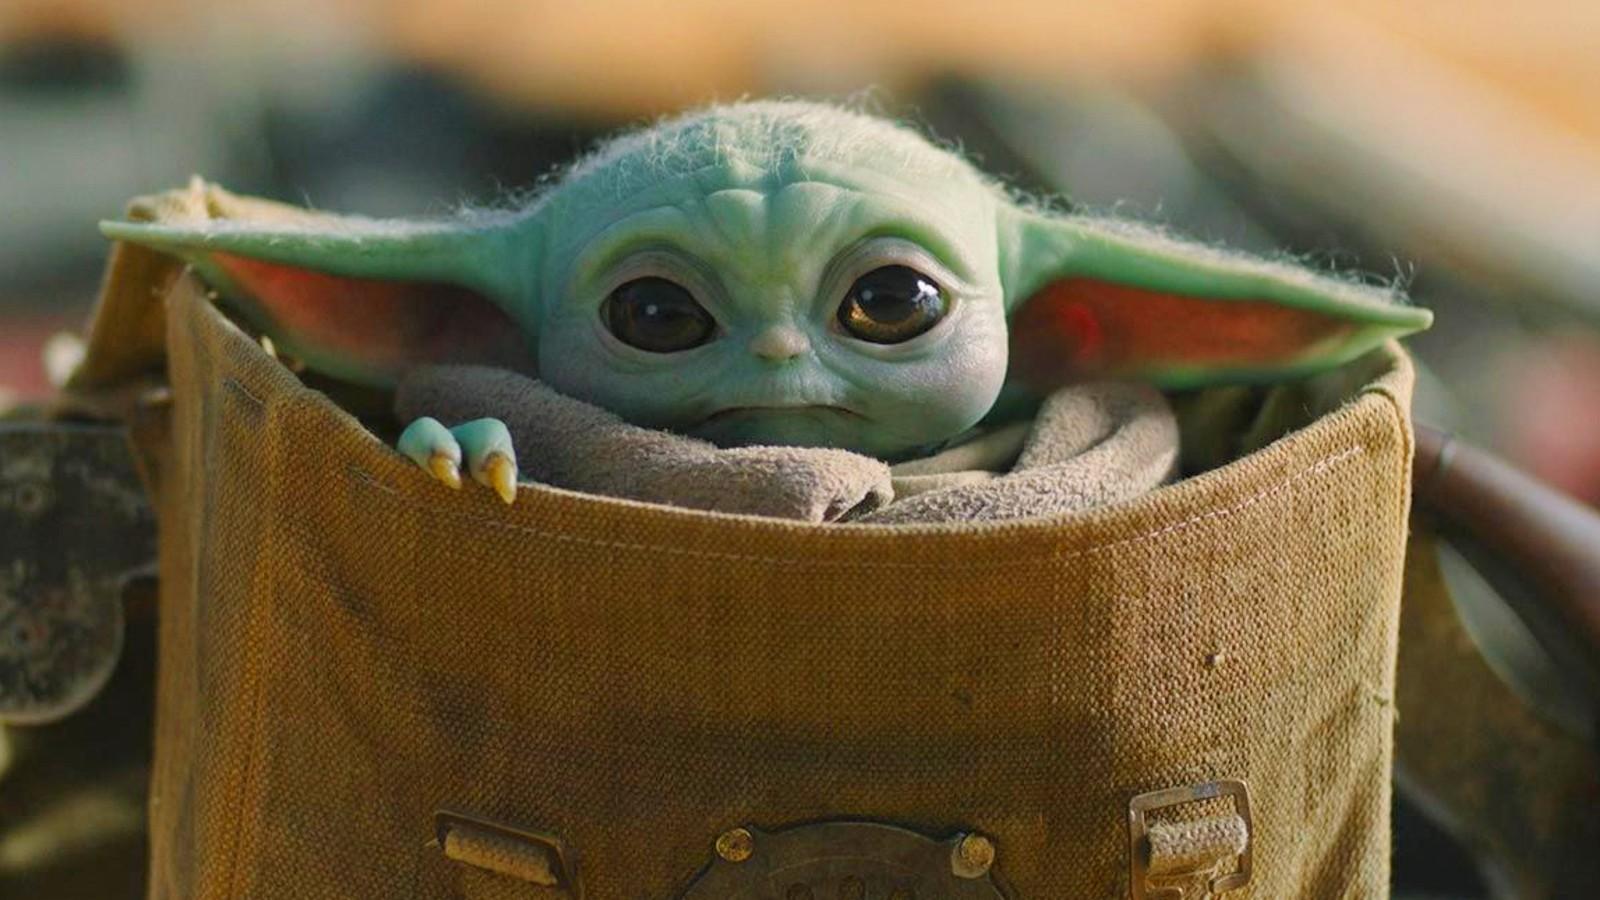 Grogu in 'The Mandalorian' - Baby Yoda Name, Background Revealed